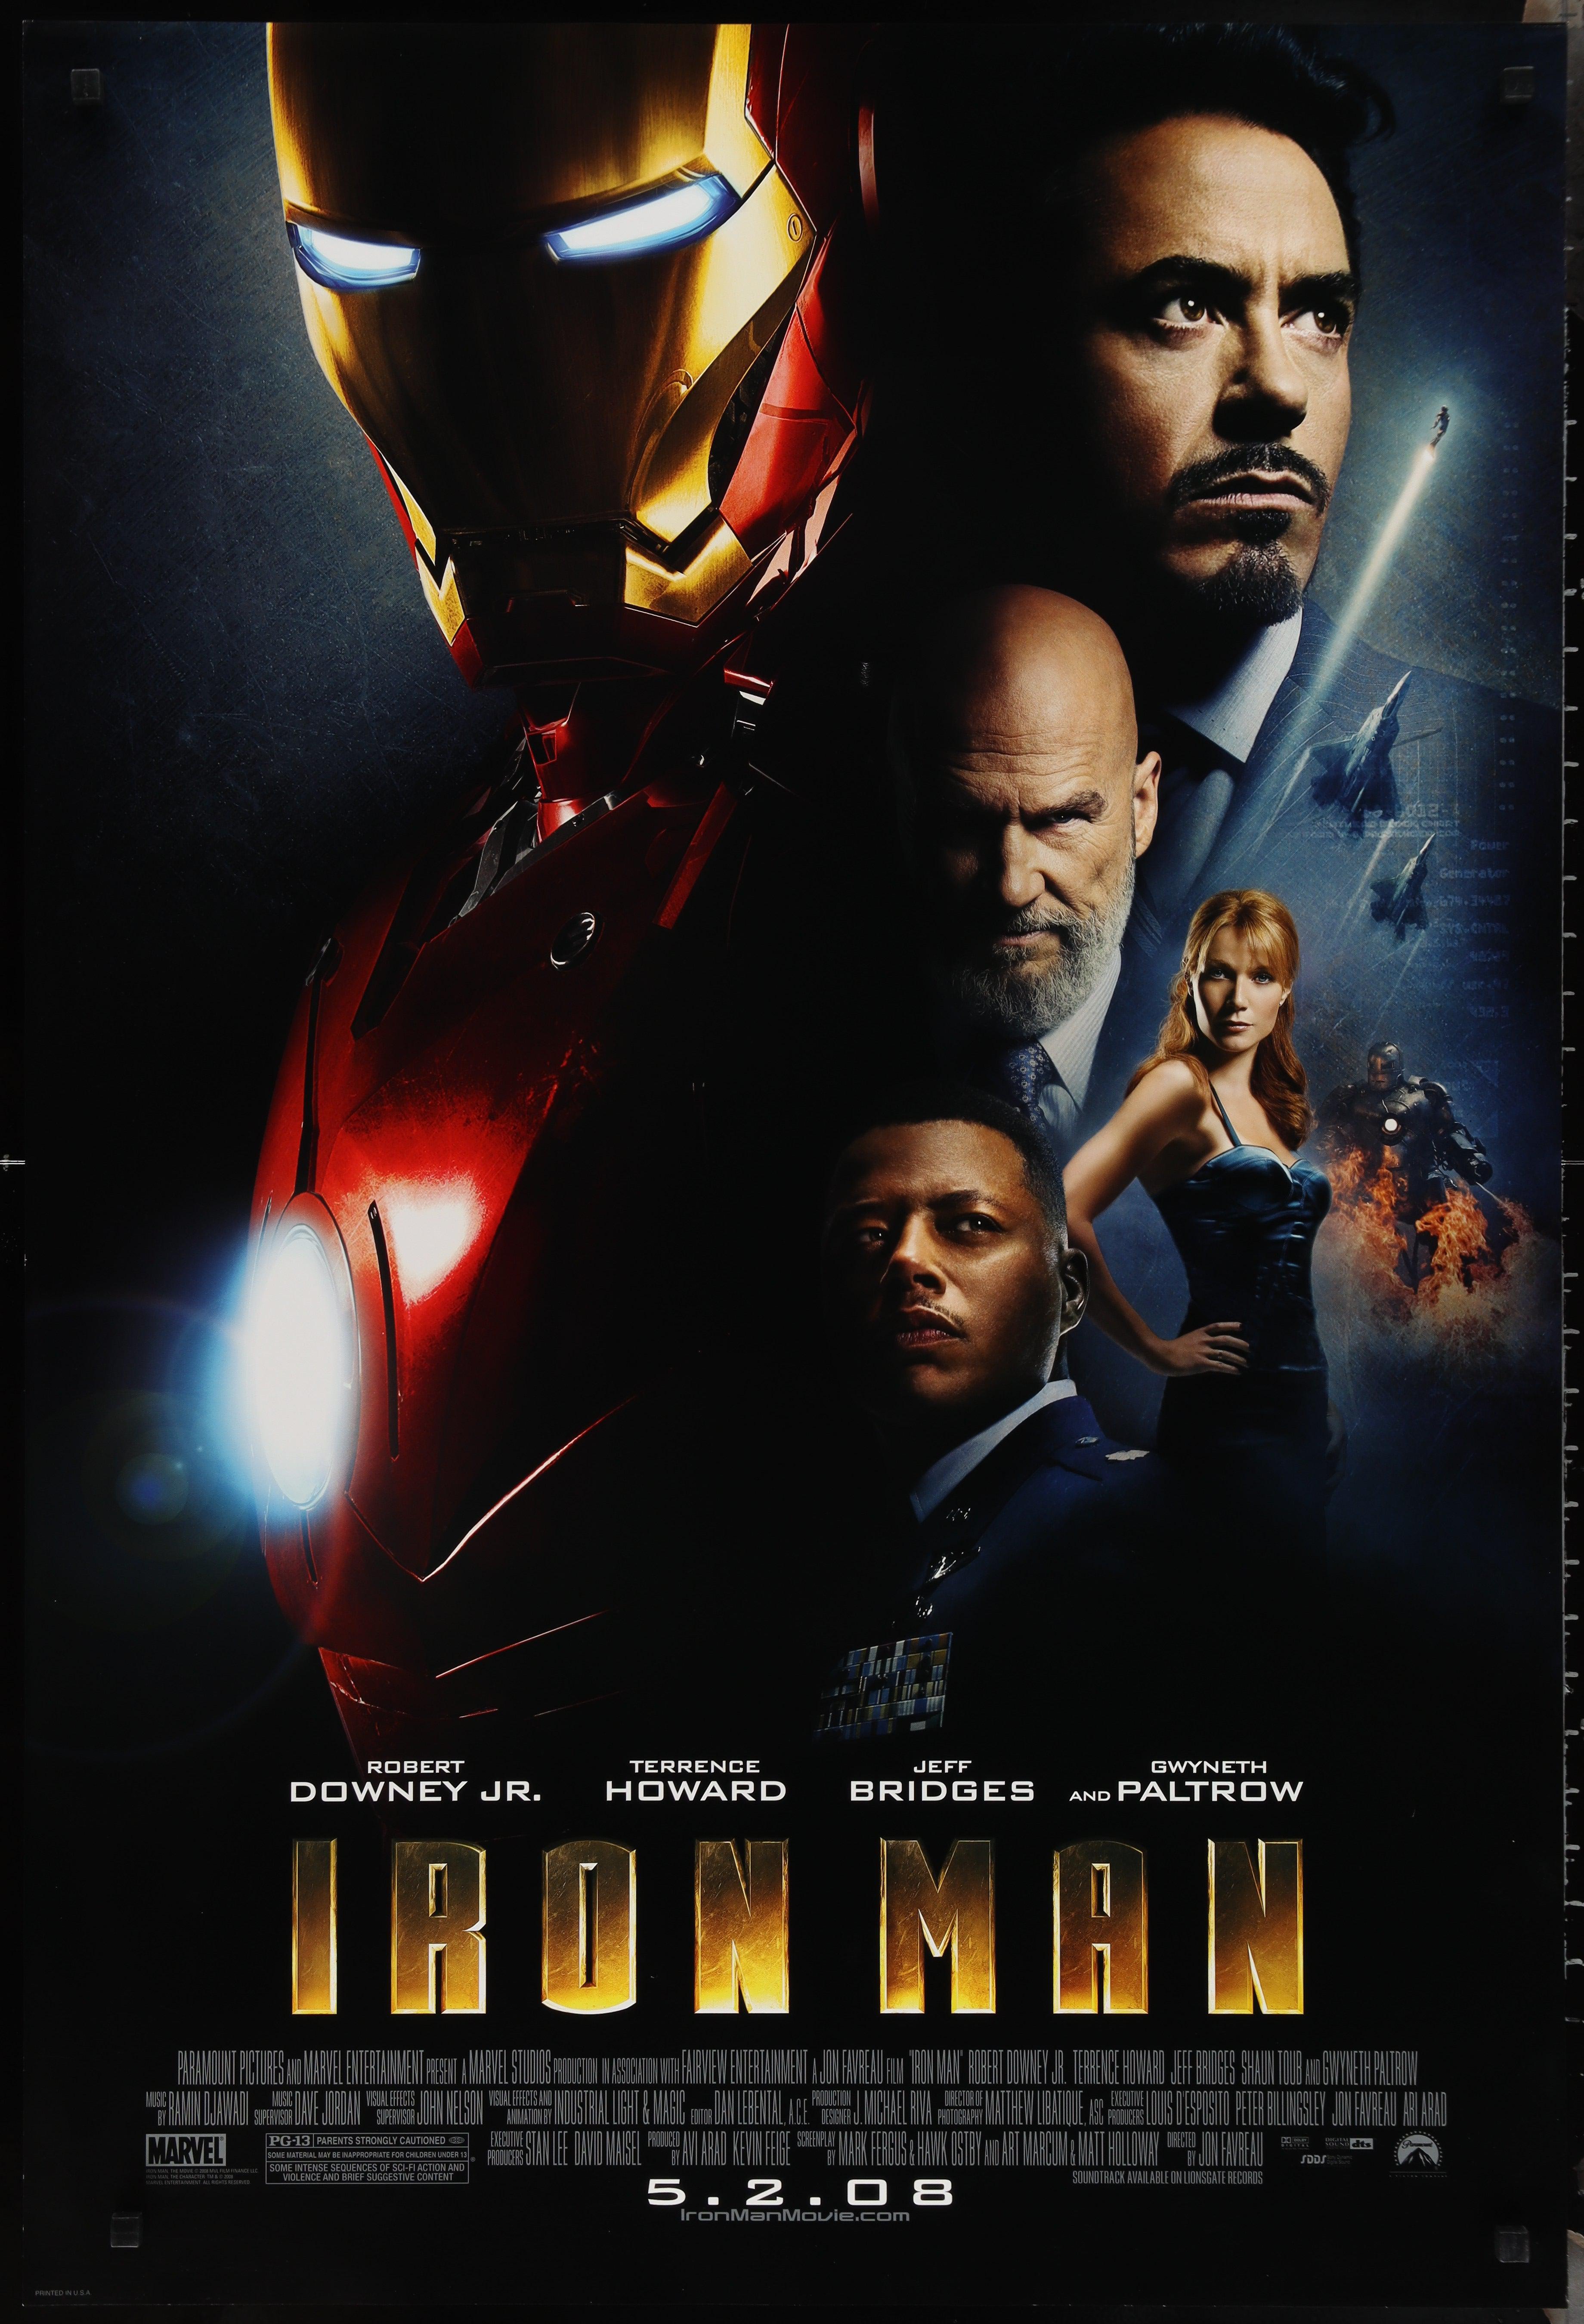 Iron Man Movie Poster 2008 1 Sheet (27x41) - Film Art Gallery